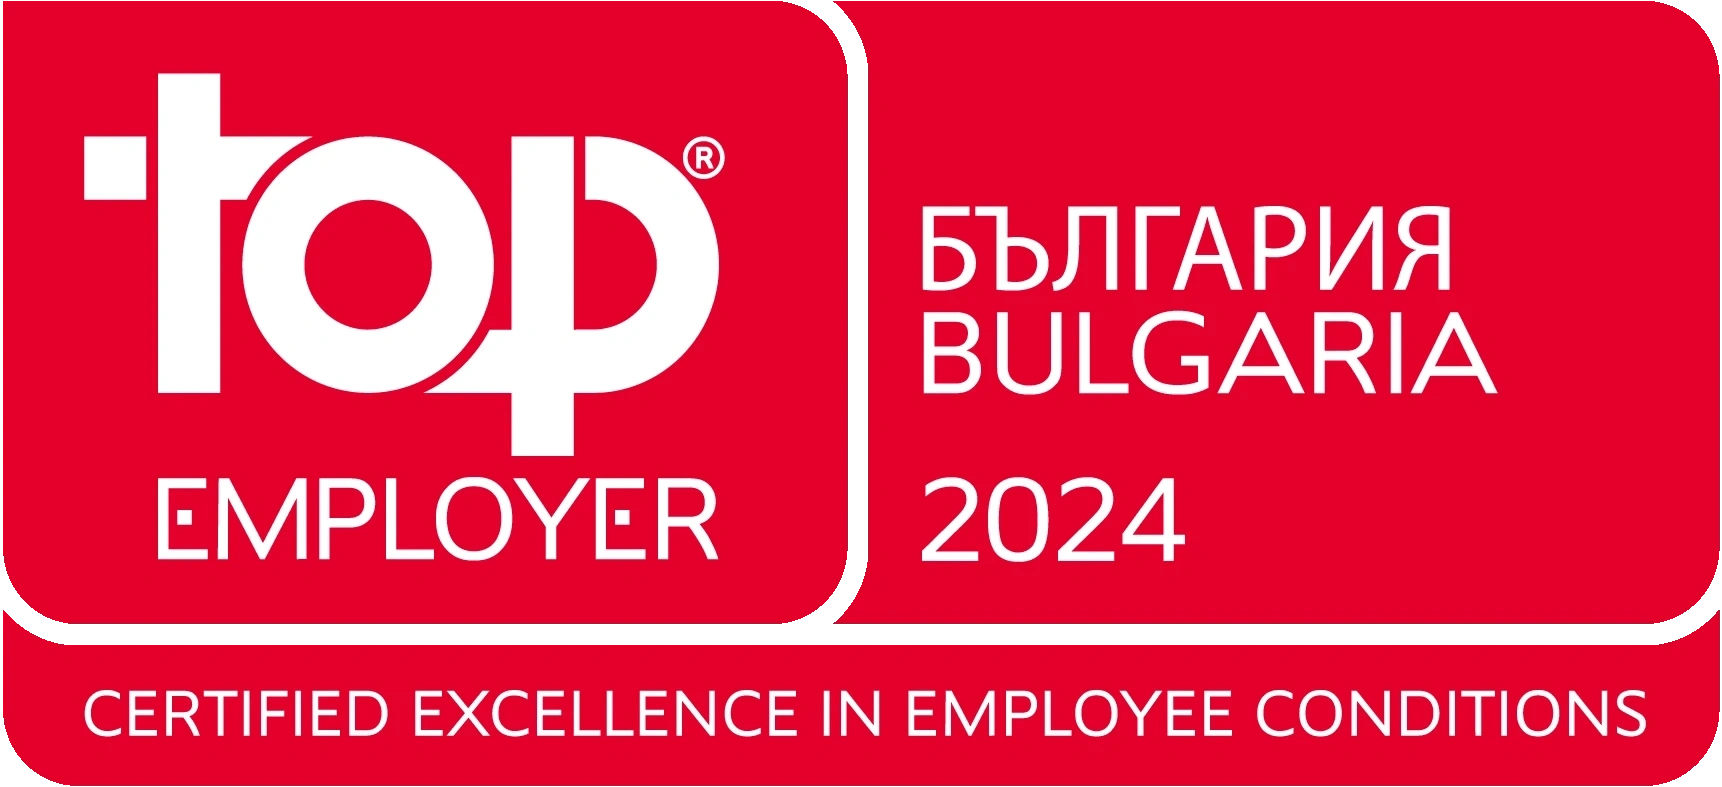 Global Top Employer #1 in Bulgaria